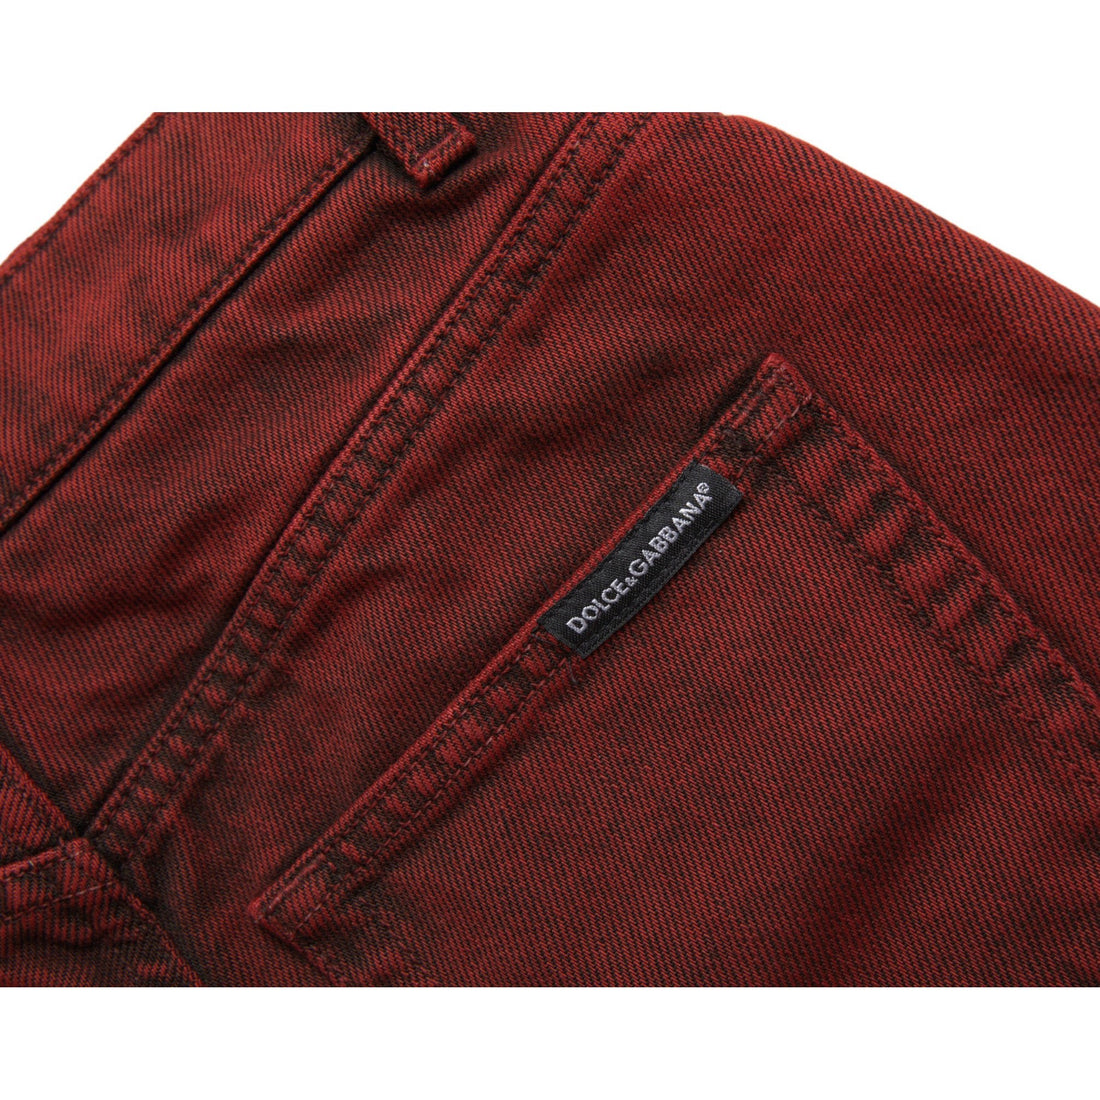 Dolce & Gabbana High Waist Red Denim Hot Pants Shorts